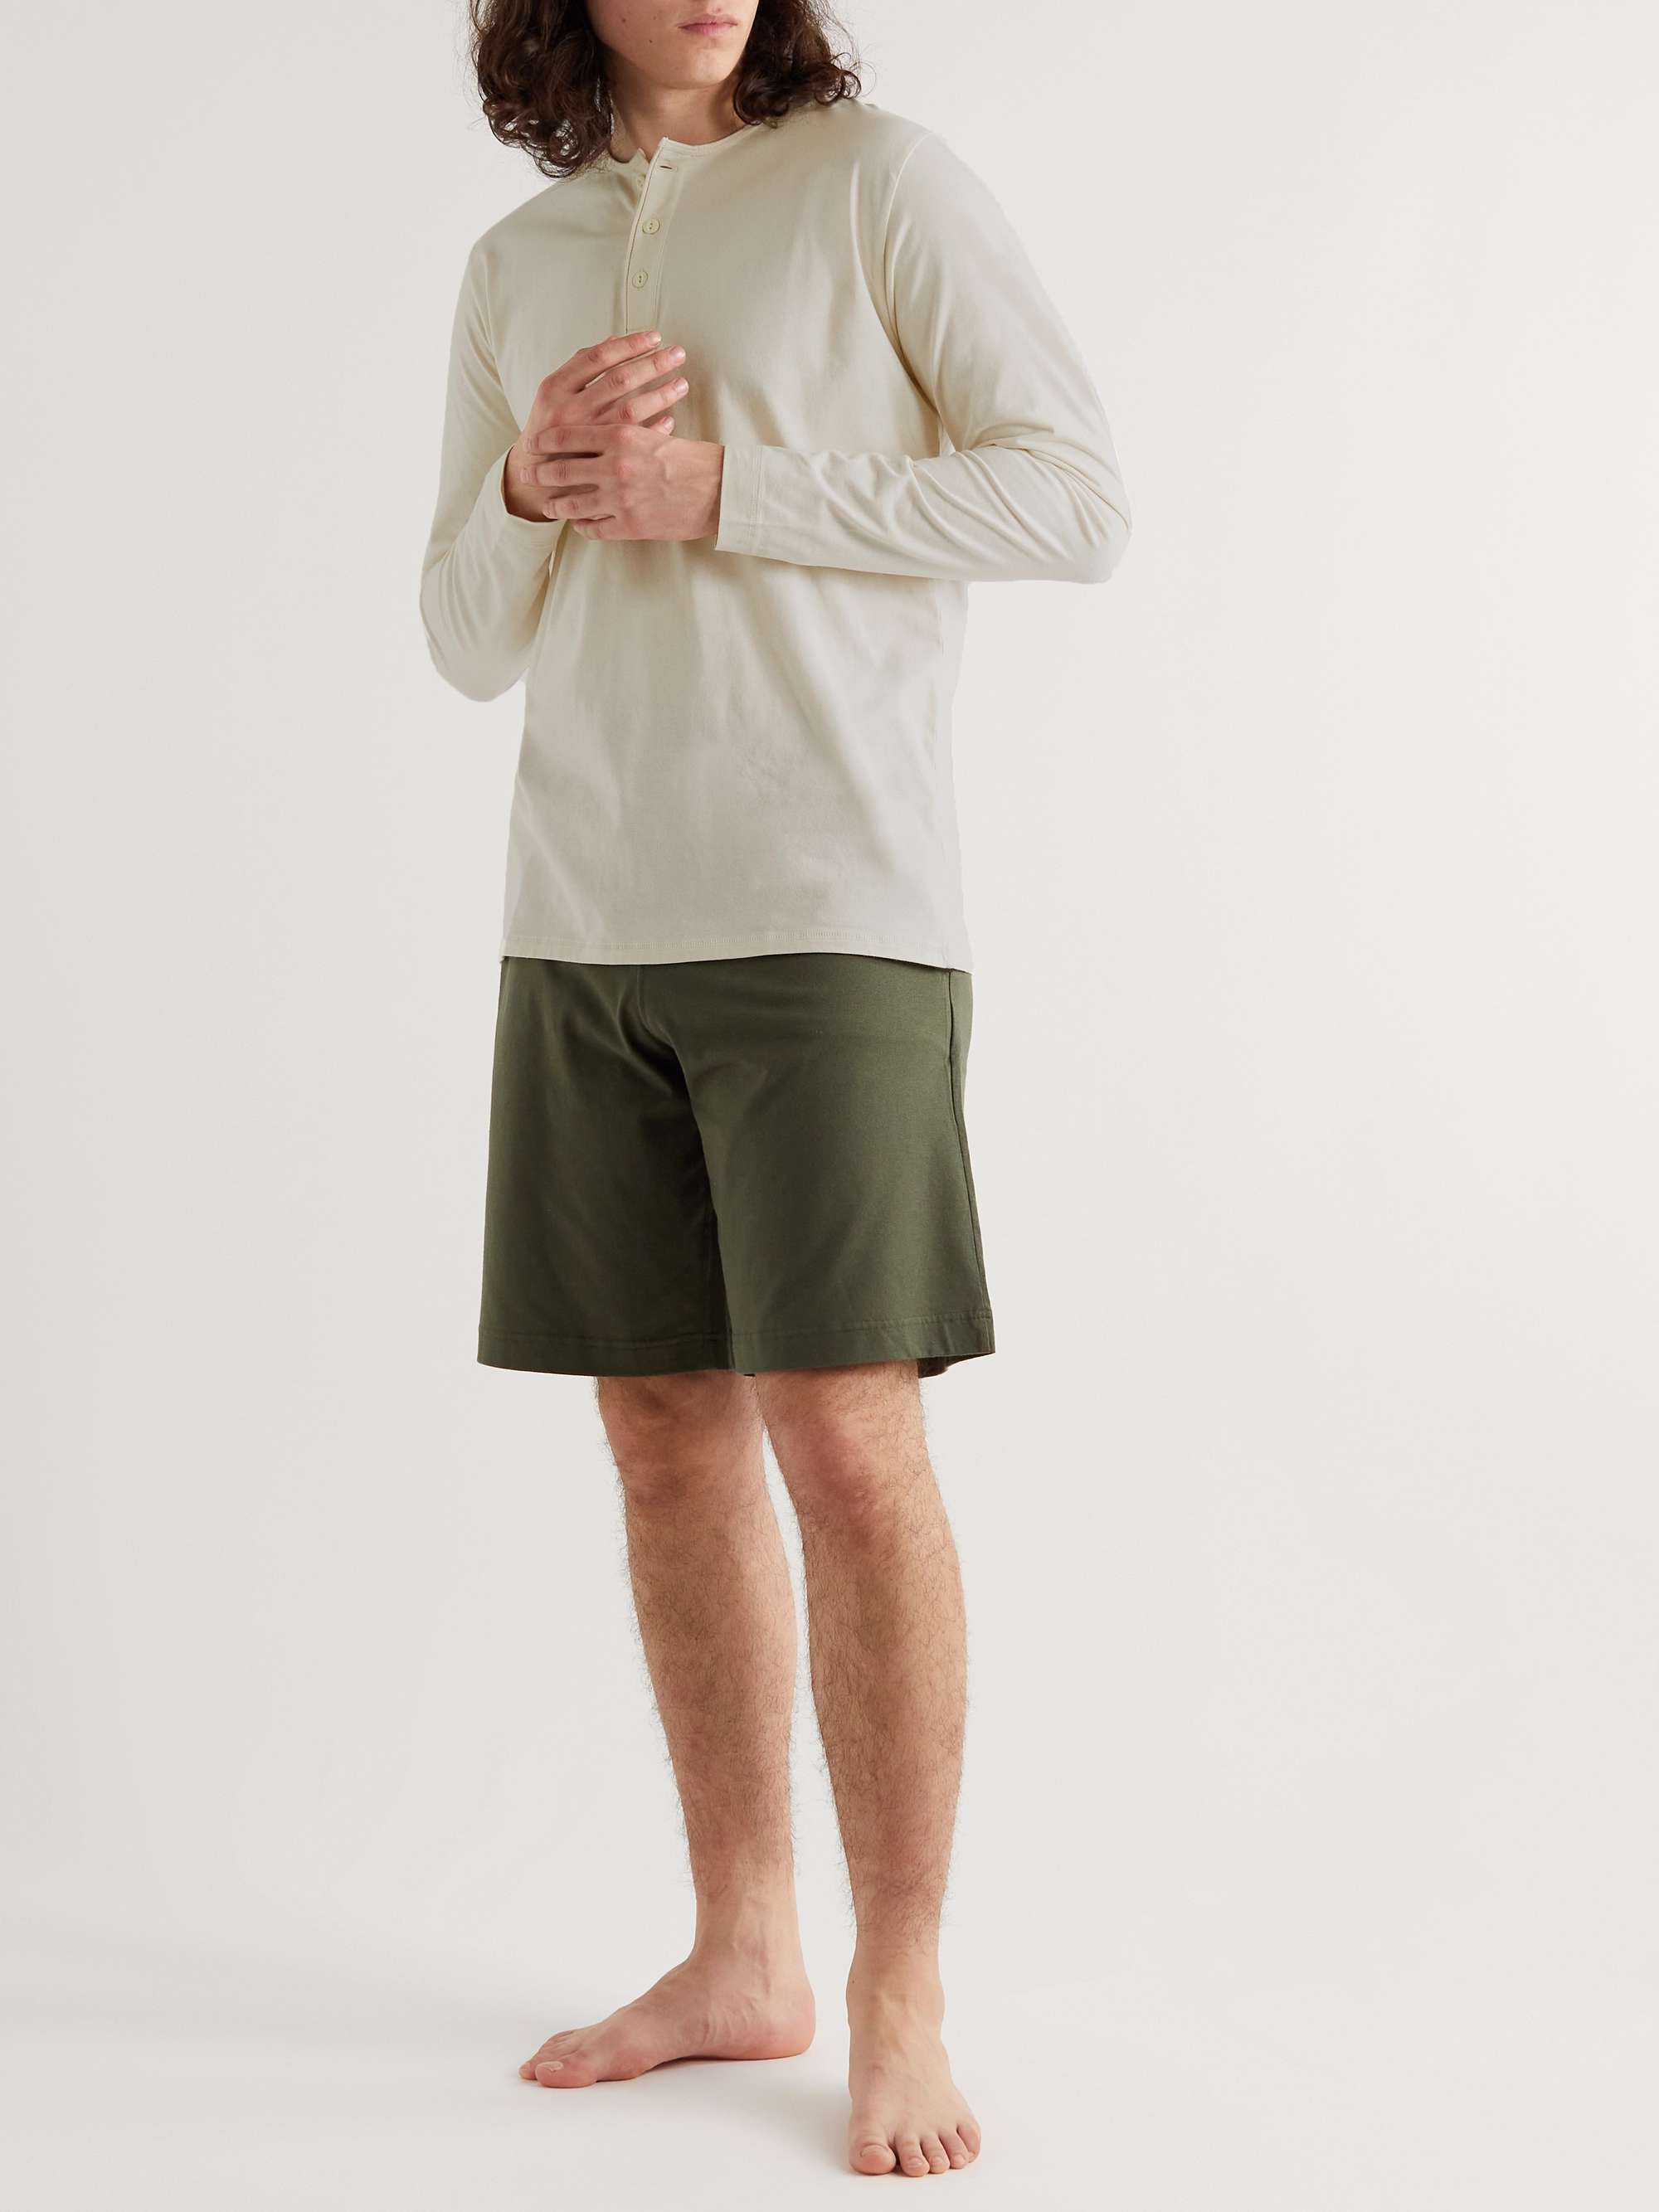 HEMEN BIARRITZ Harri Slim-Fit Organic Cotton-Jersey Henley Pyjama T-Shirt